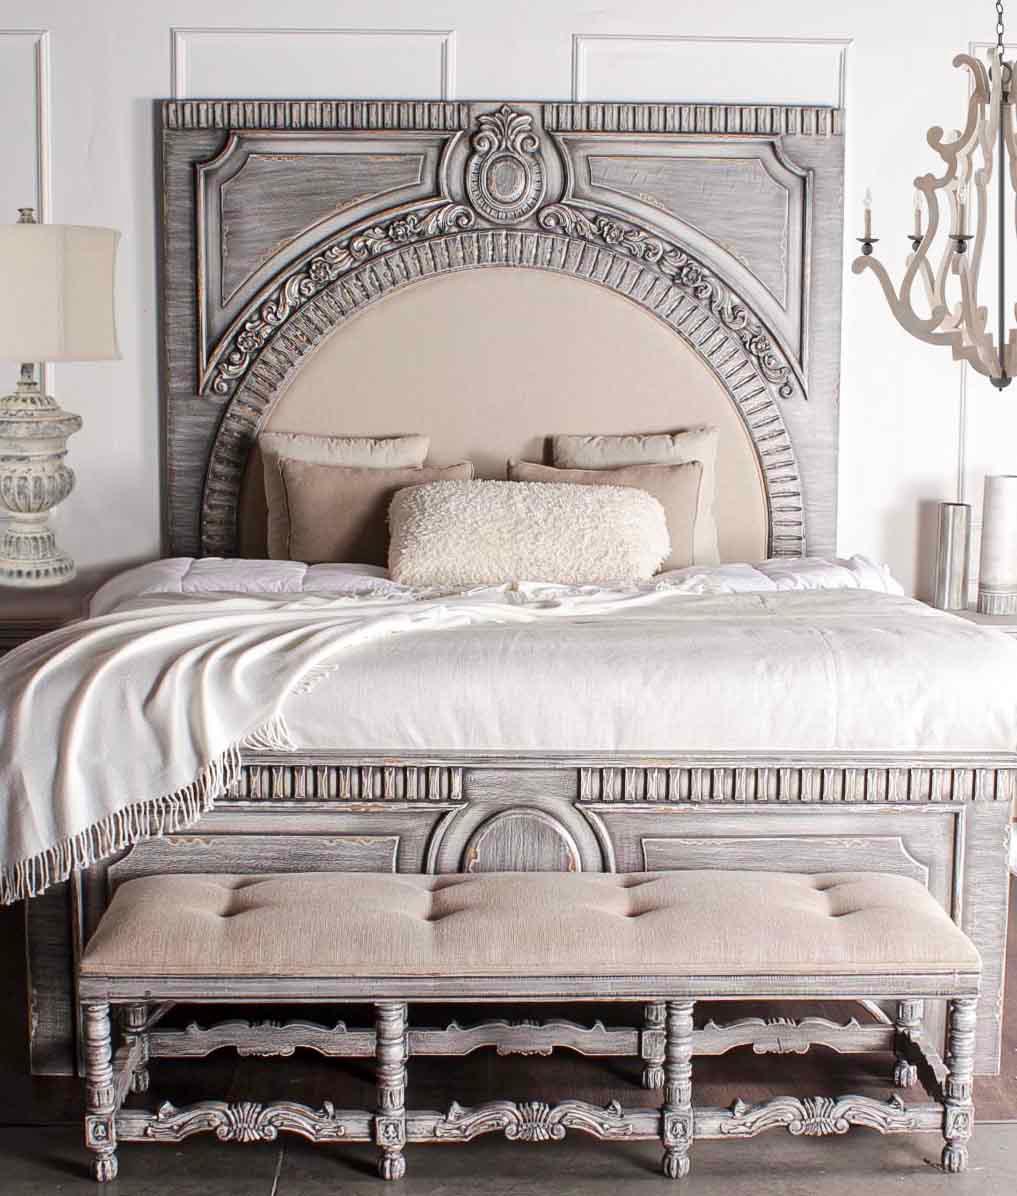 Ornate Gray Wash Amelie Bed - Belle Escape